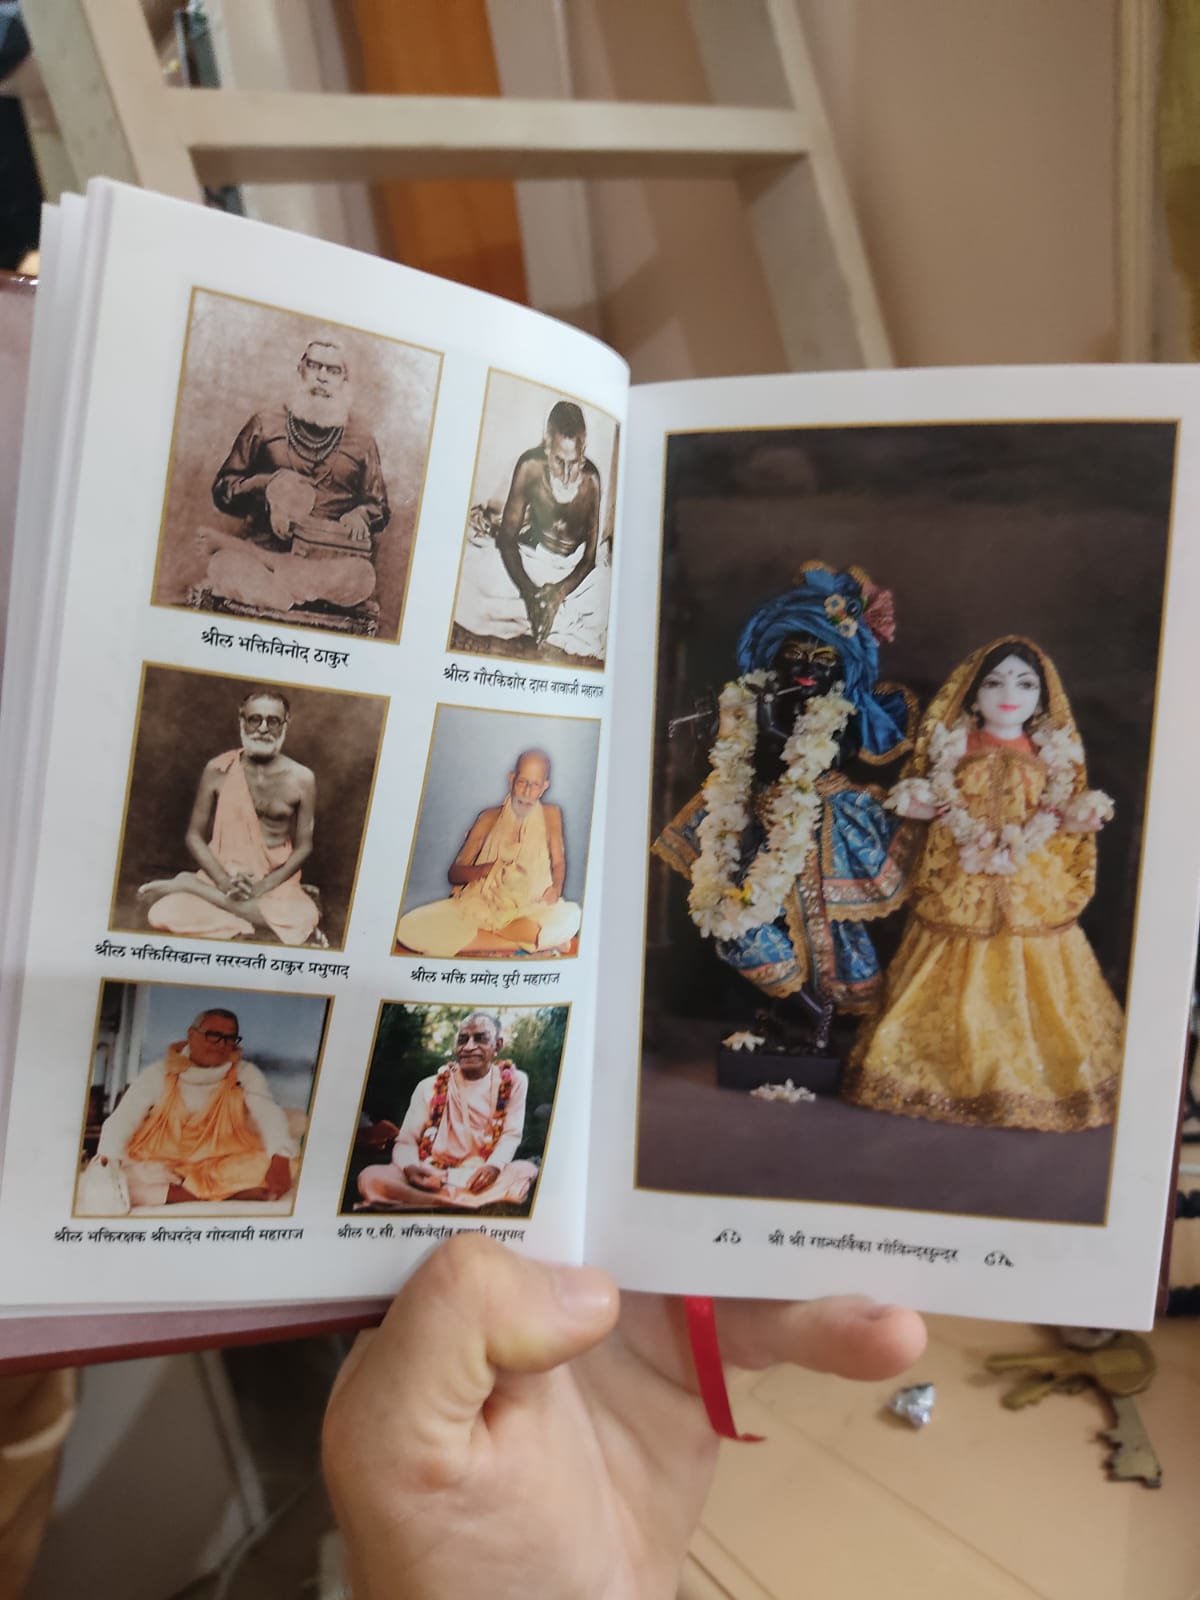 Hindi Bhagavad Gita